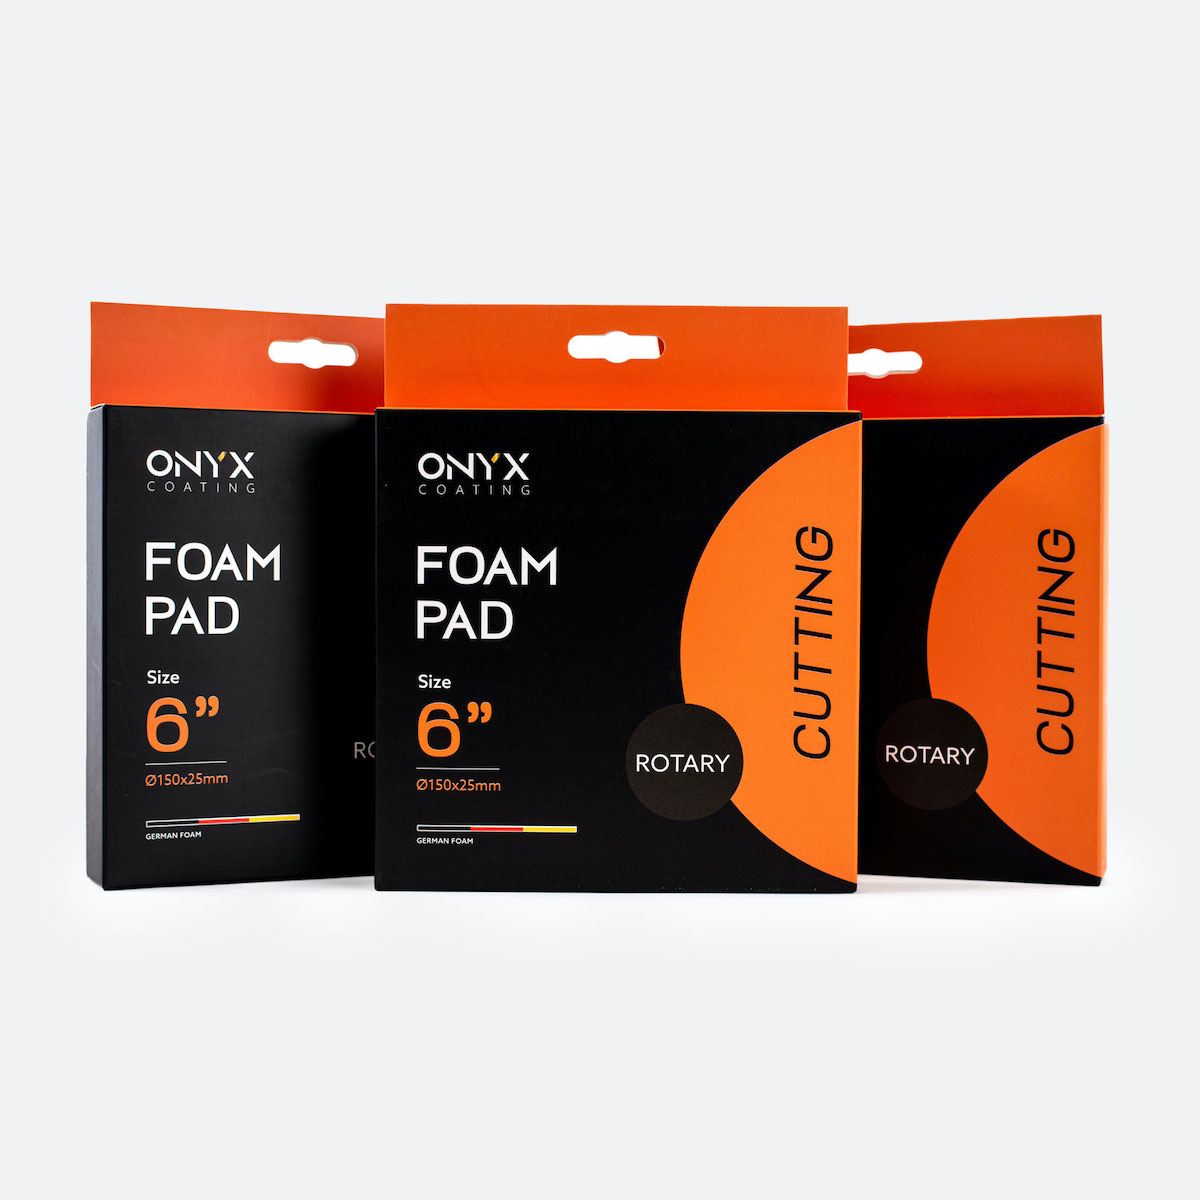 Cutting Orange Pad - DA - Onyx Coating